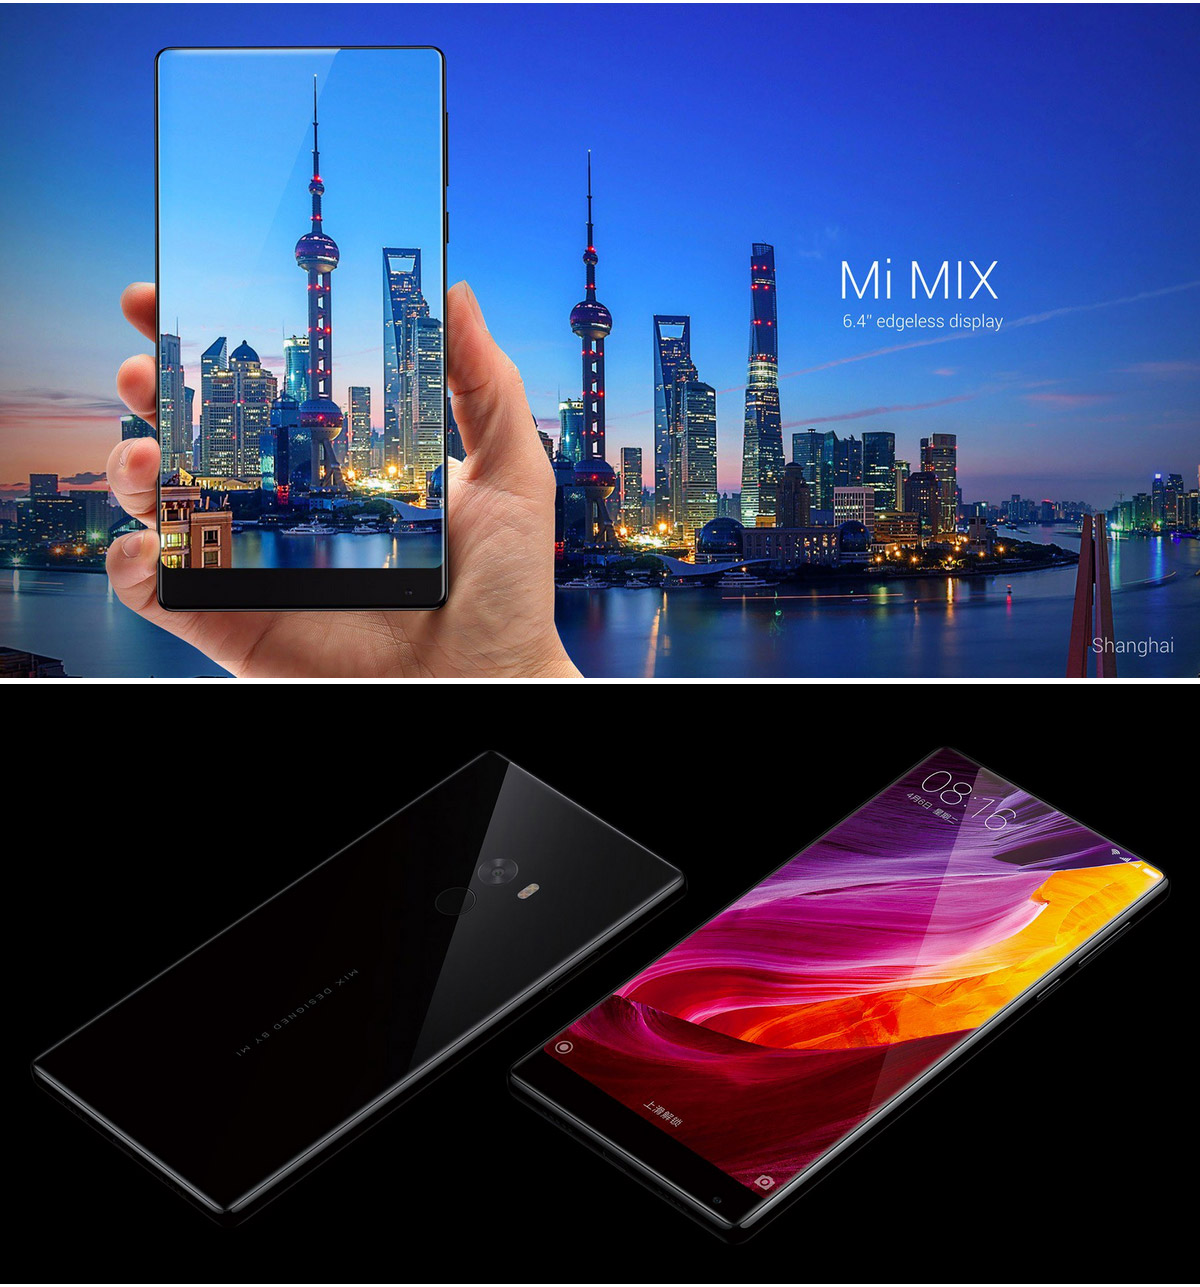 Xiaomi Mi MIX 6.4inch 2040*1080 FHD Full Screen Android 6.0 OS 4G+ LTE Smartphone 64-Bit Qualcomm Snapdragon 821 4GB 128GB 16.0MP NFC Touch ID Full Ceramic Body - Black